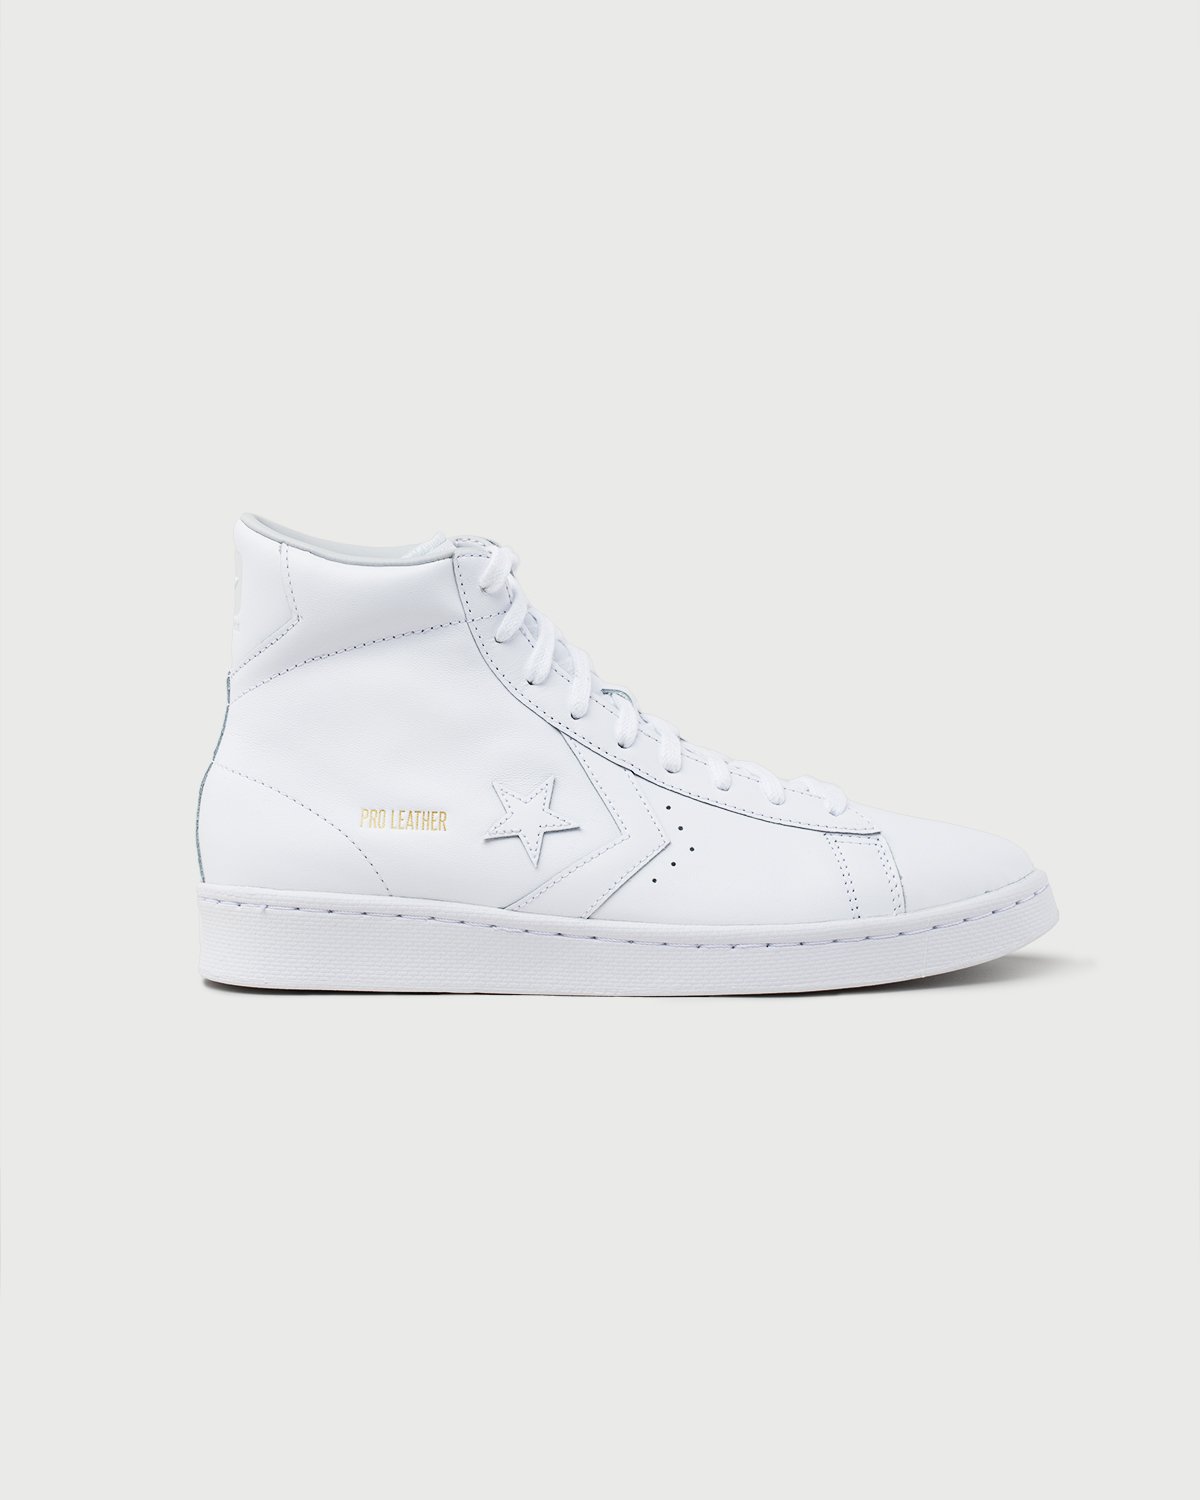 Converse - Pro Leather Hi White - Footwear - White - Image 1